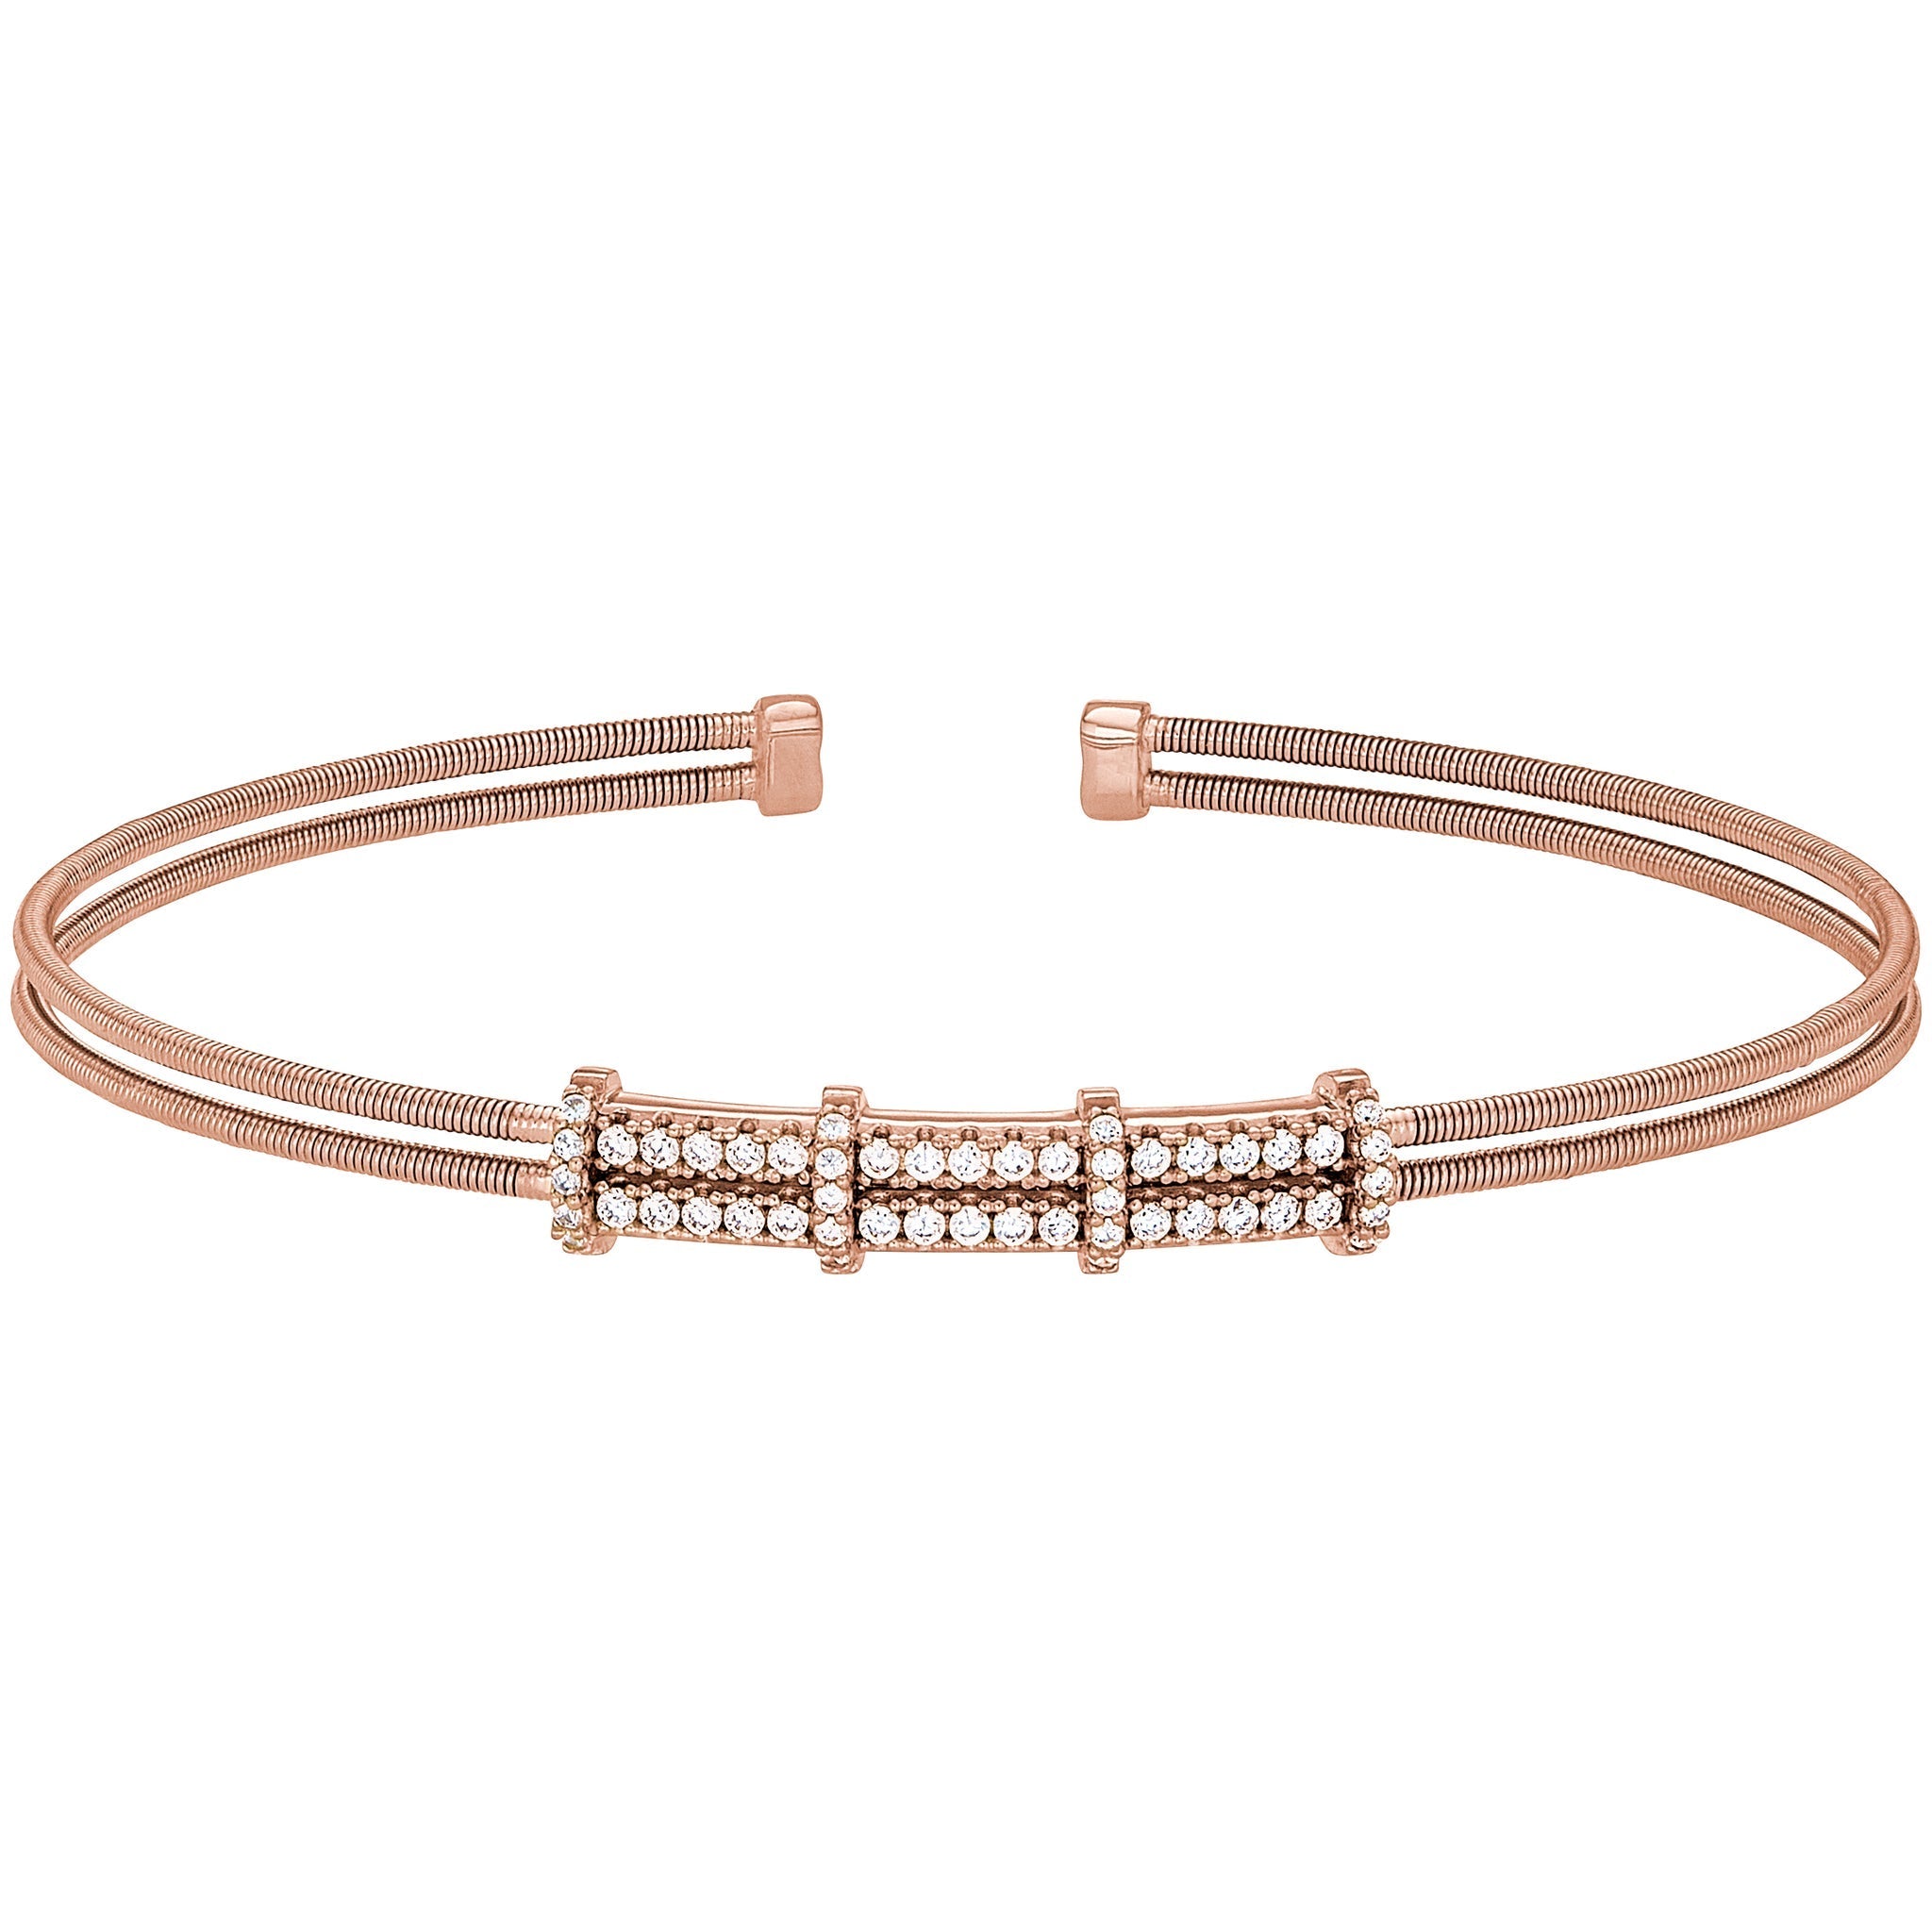 14K YG WOMEN'S DIAMOND TENNIS BRACELET - jewelry - by owner - sale -  craigslist